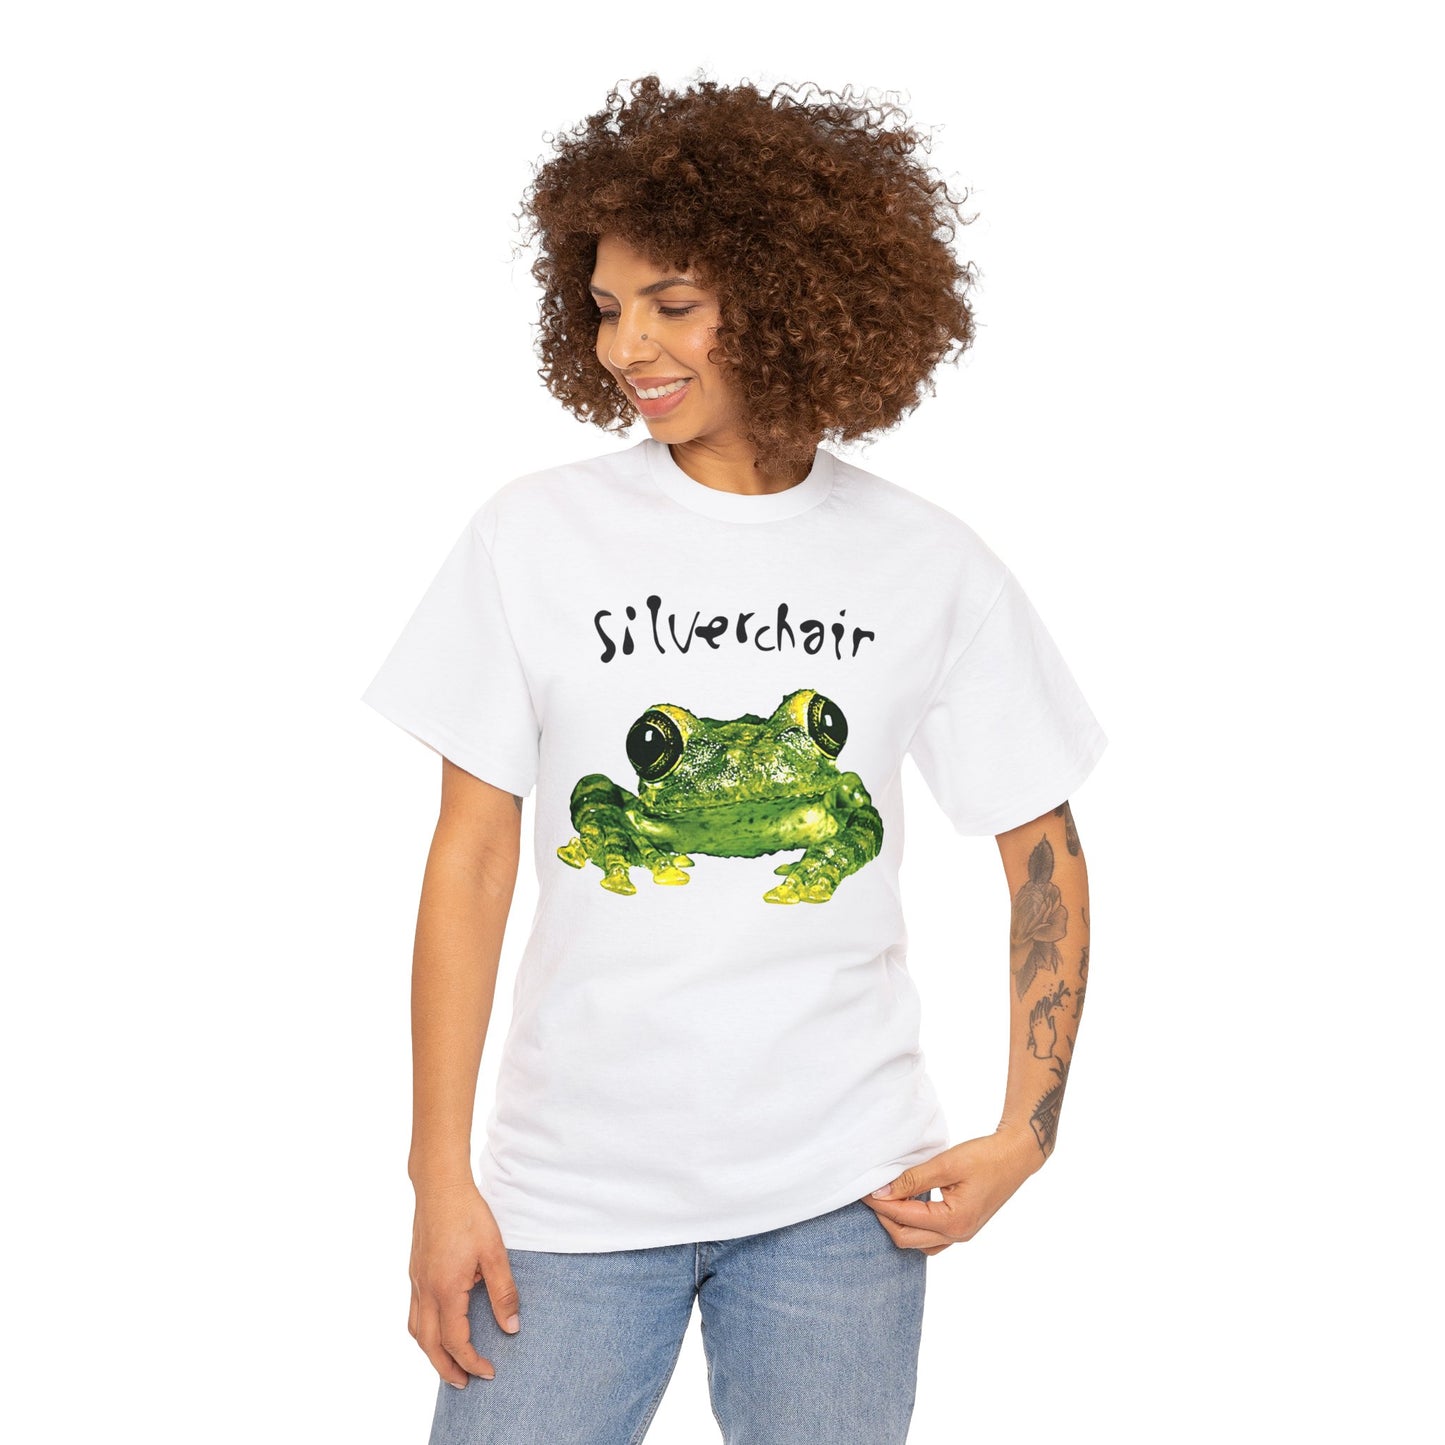 Silverchair Frogstomp Tour 1996 Grunge Rock T-shirt for Sale